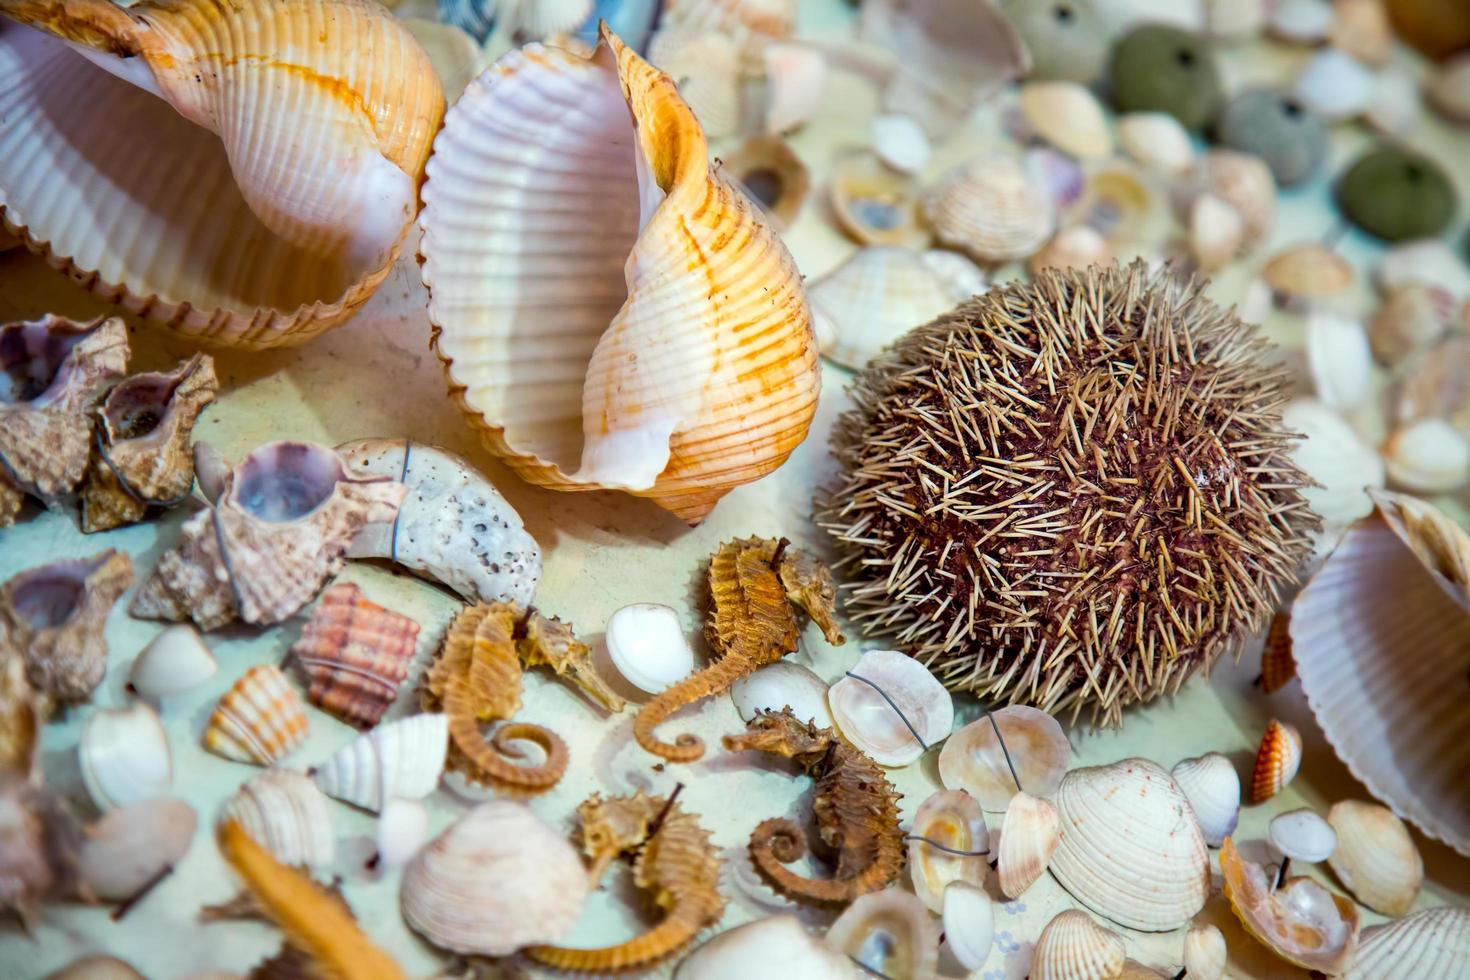 Sea Animal Dried Fish and Seashell photo